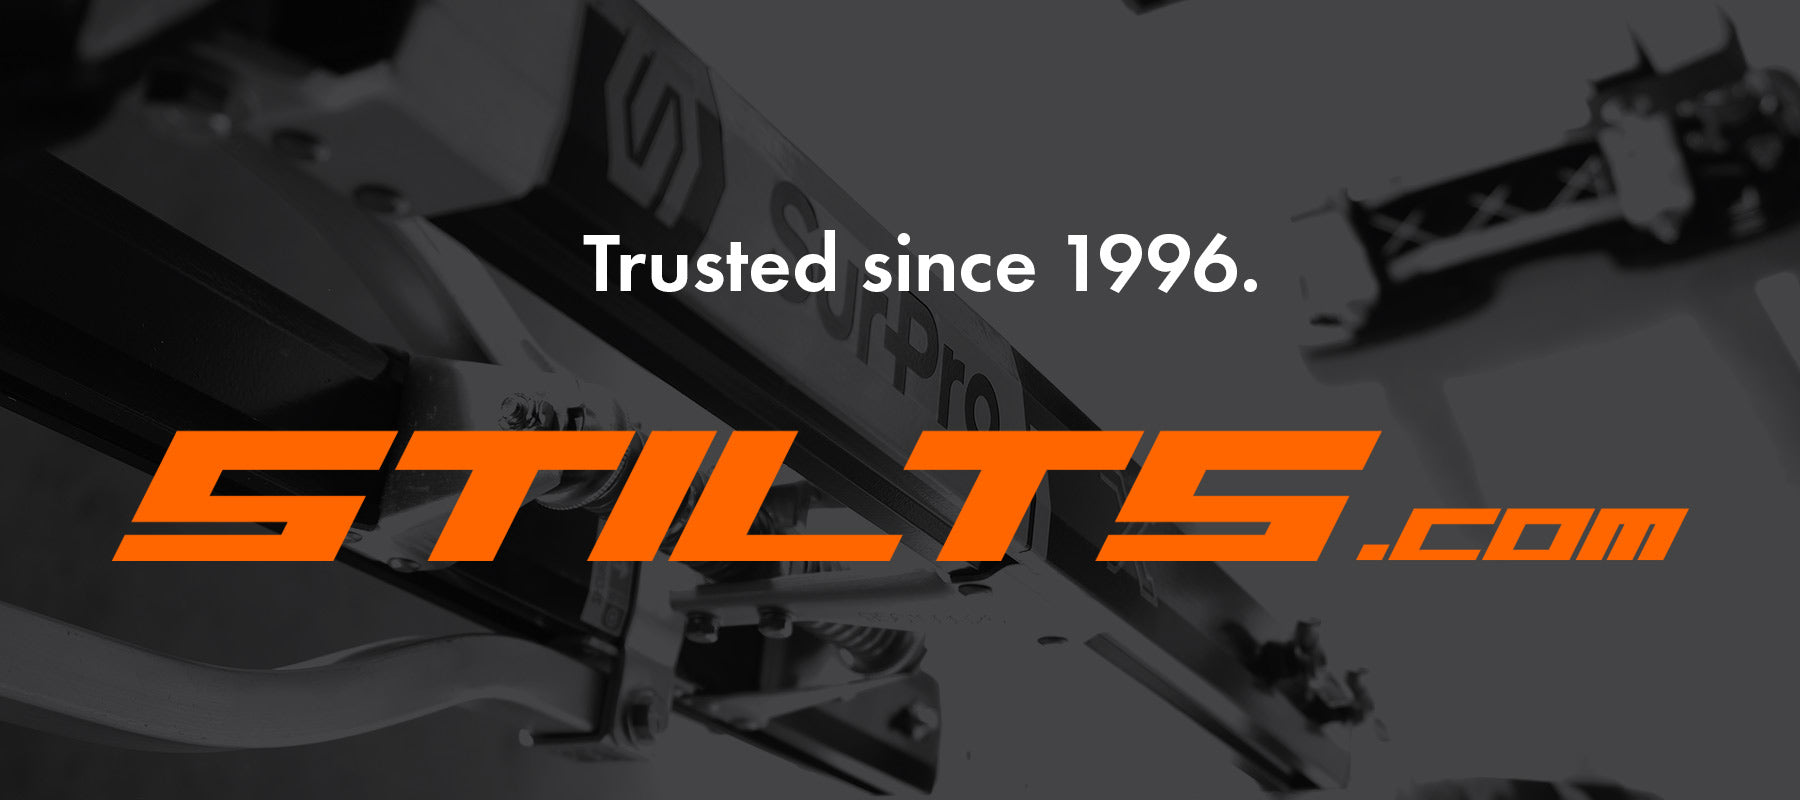 Stilts.com trusted since 1996